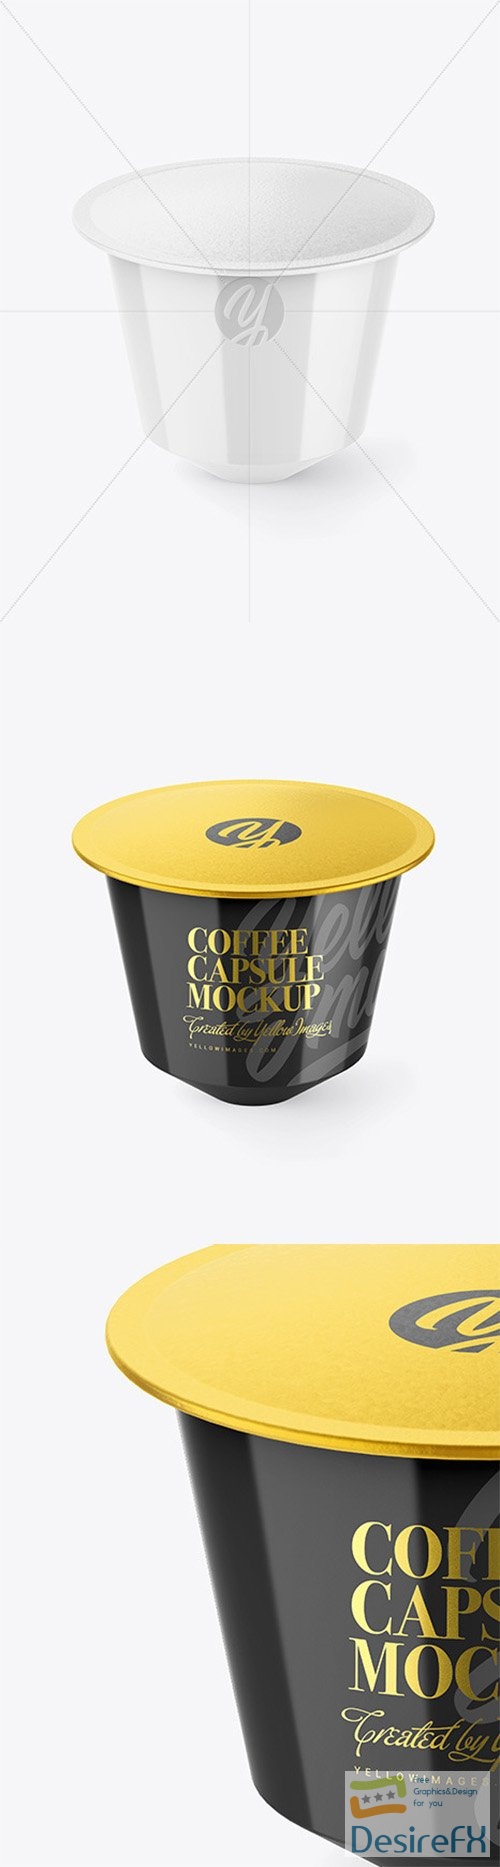 Glossy Coffee Capsule Mockup 62893 TIF